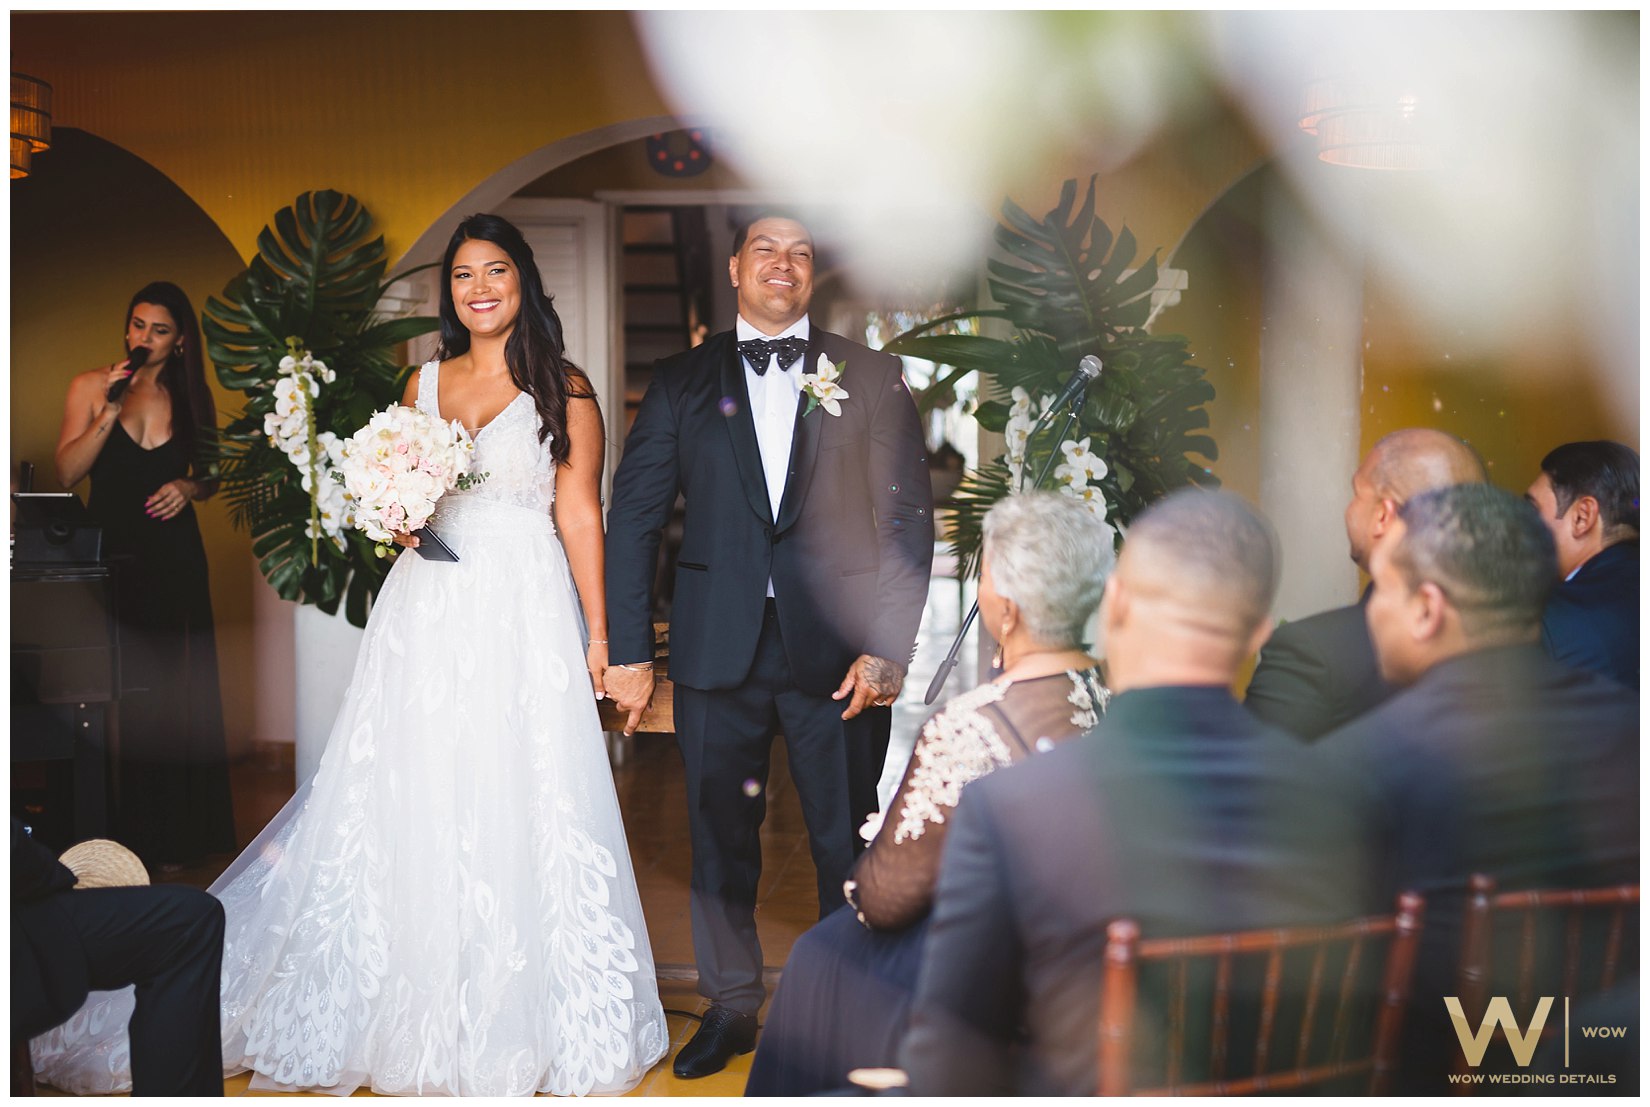 Moira & Robby - Wow Wedding Details Photography @ Sirena Bay Curacao_0007.jpg